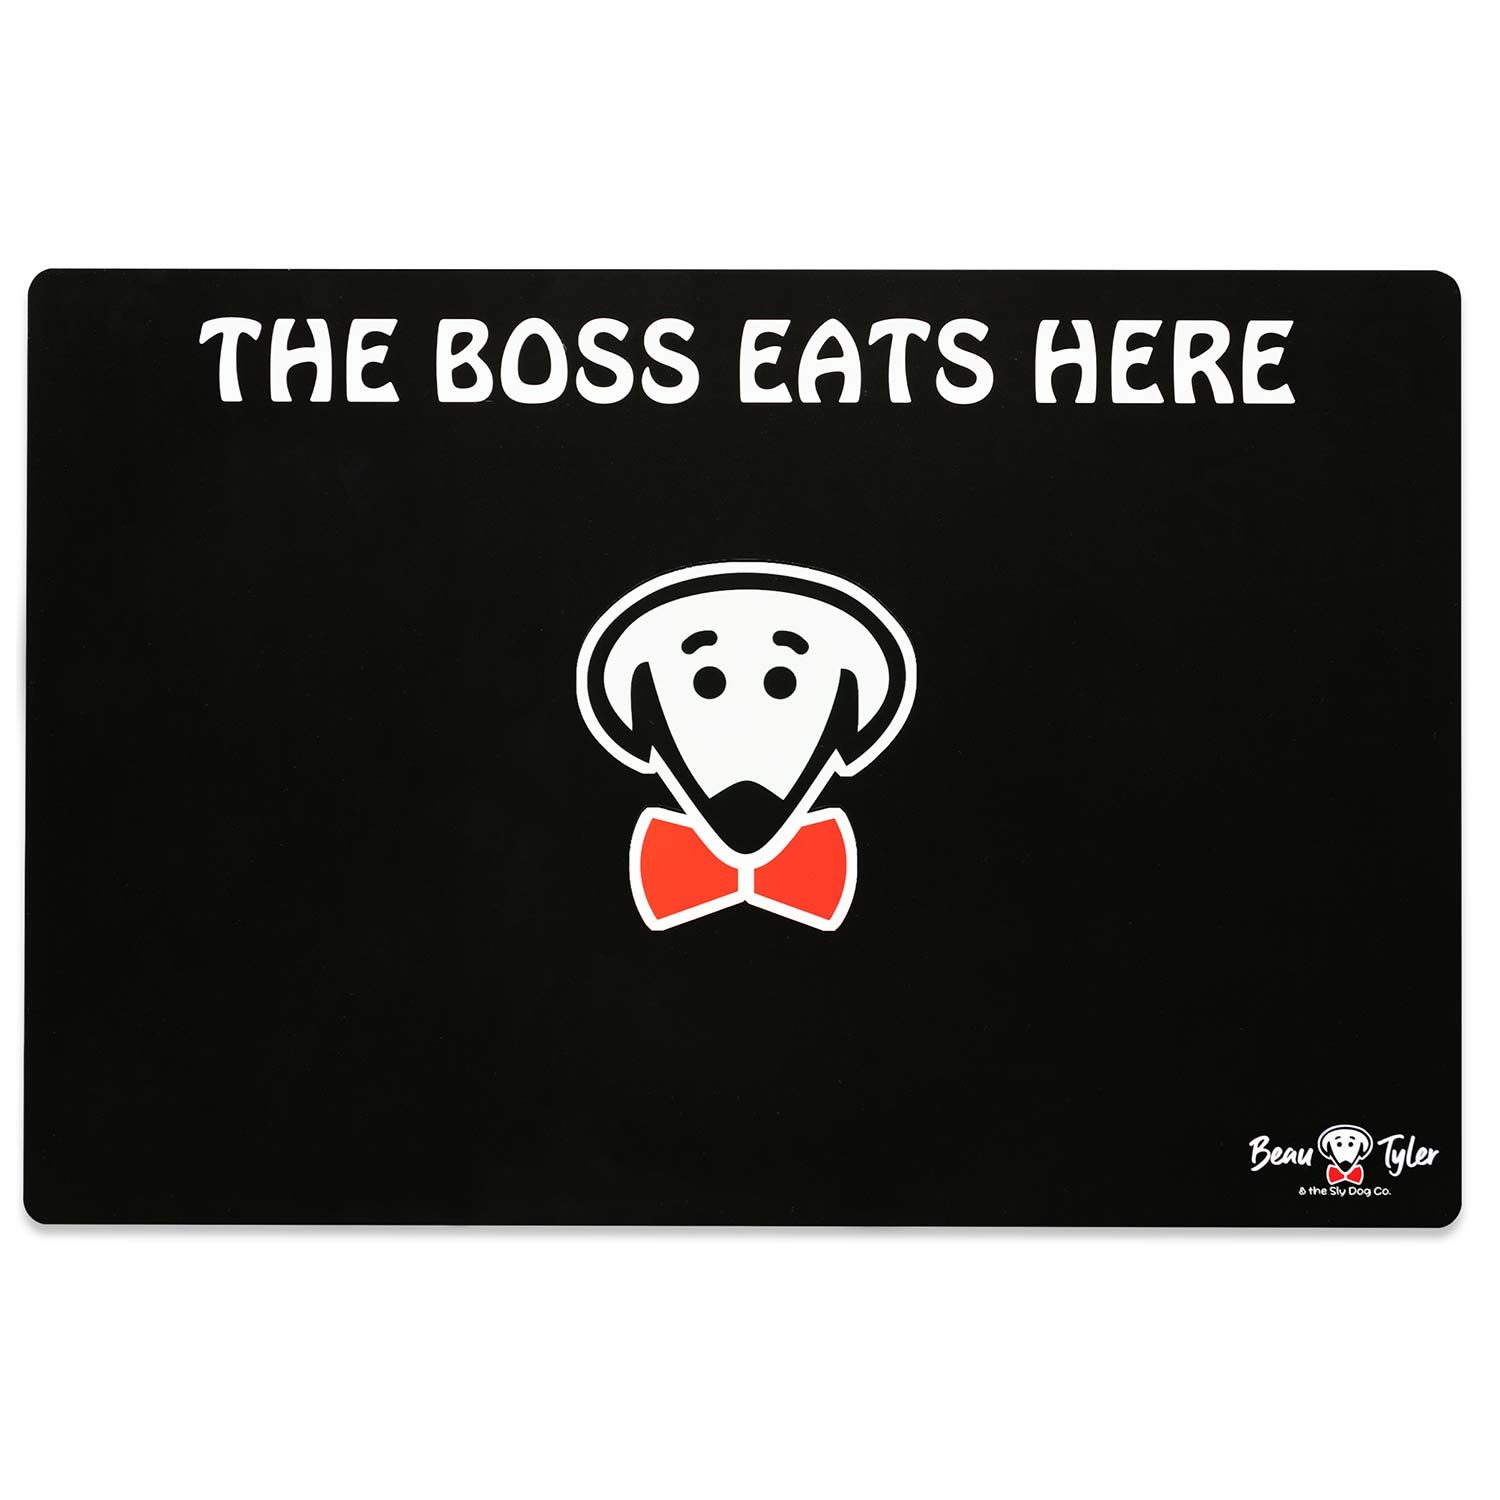 The Boss Eats Here pet mat in black by Beau Tyler